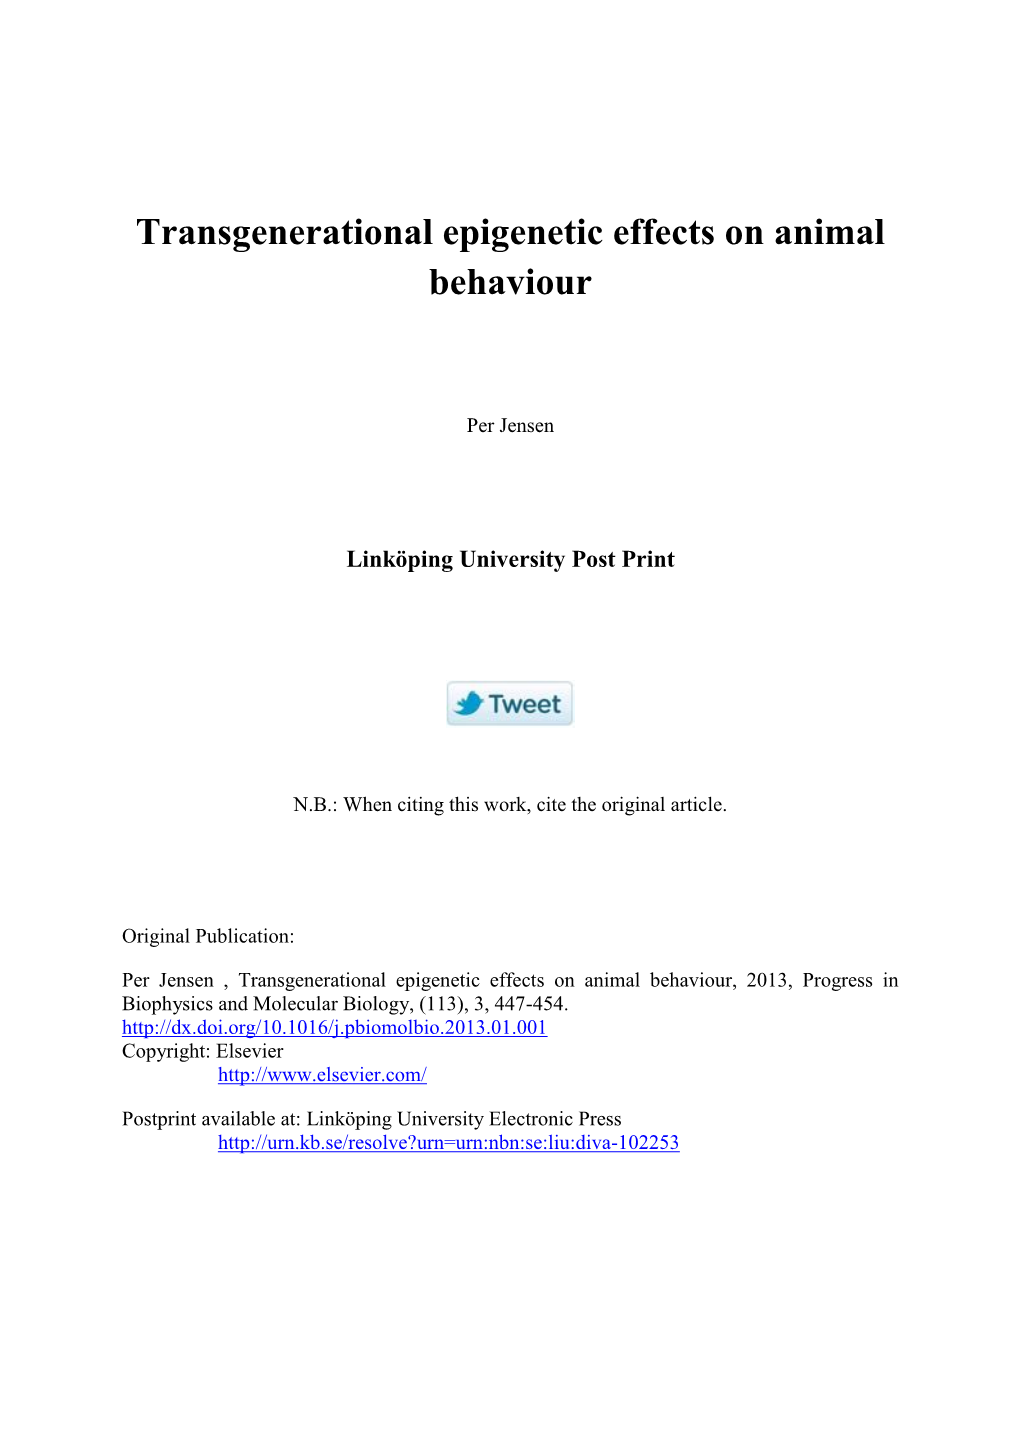 Transgenerational Epigenetic Effects on Animal Behaviour